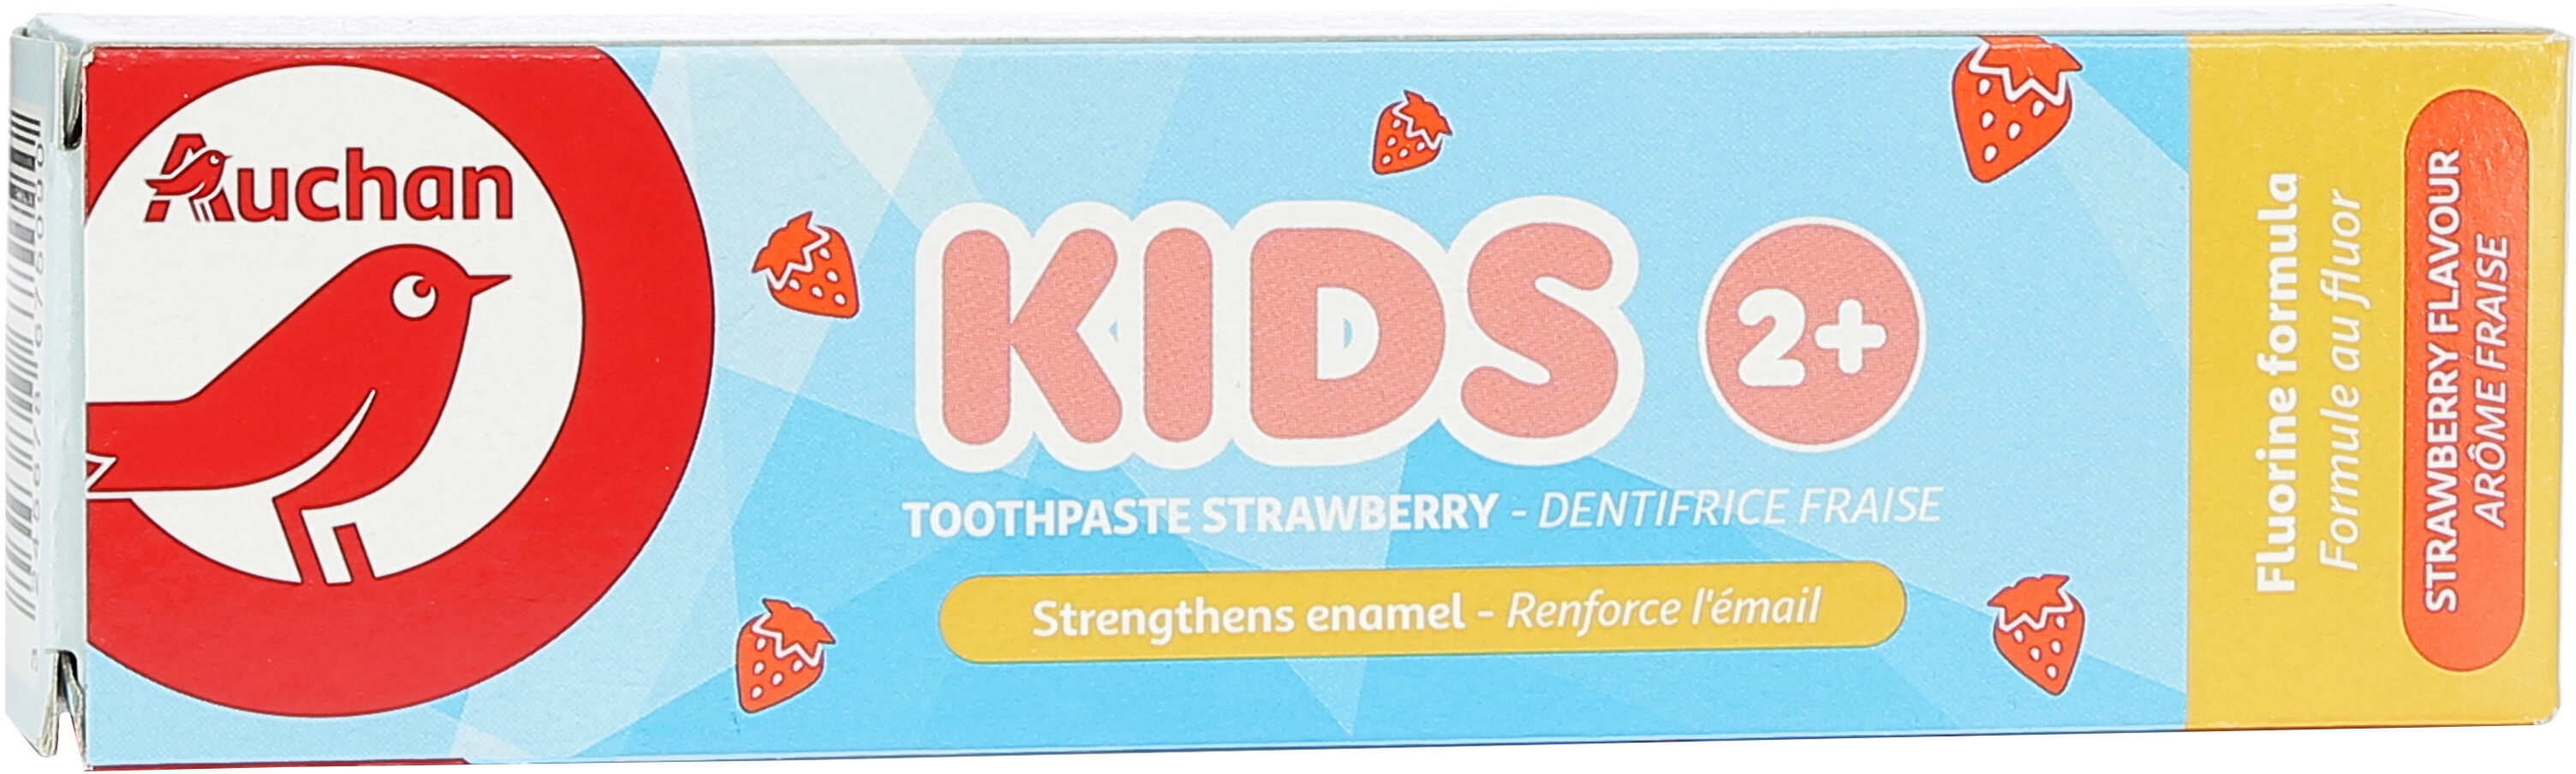 Auchan kids dentifrice - fraise - enfants 2 + - 50ml - Produktas - fr